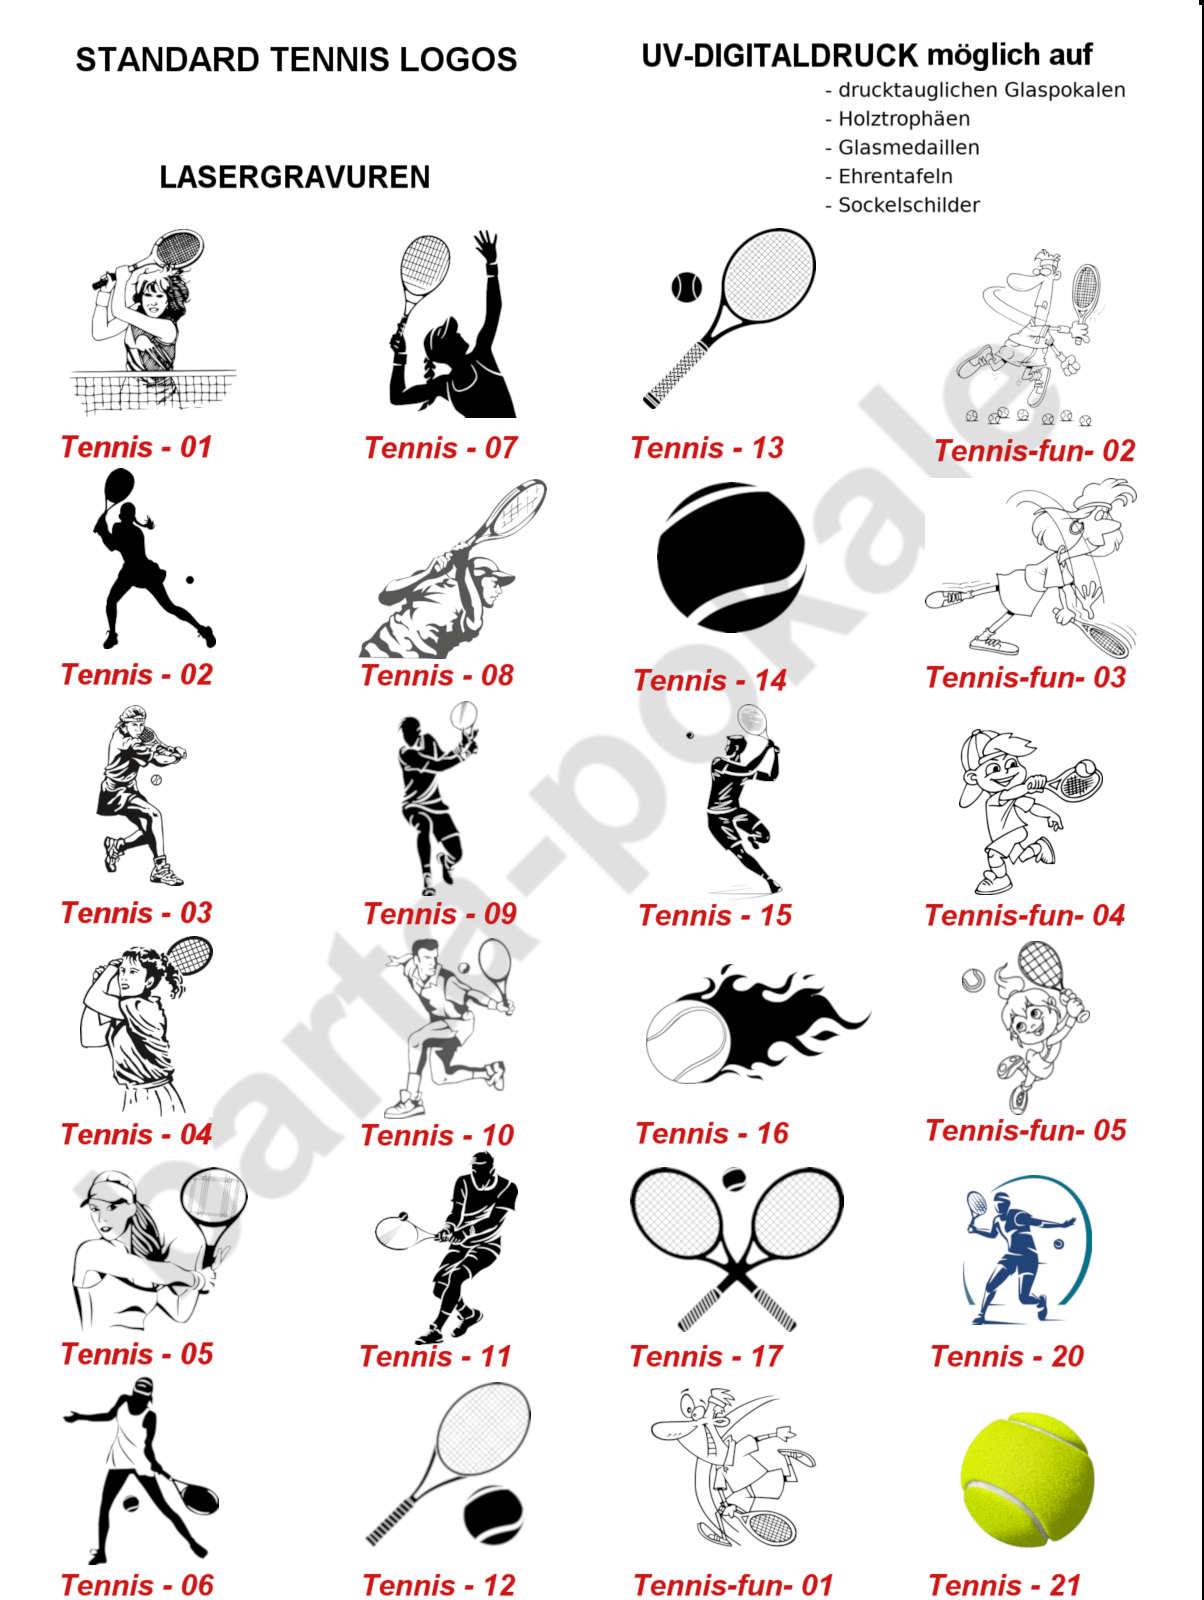 Standard Logos Tennis